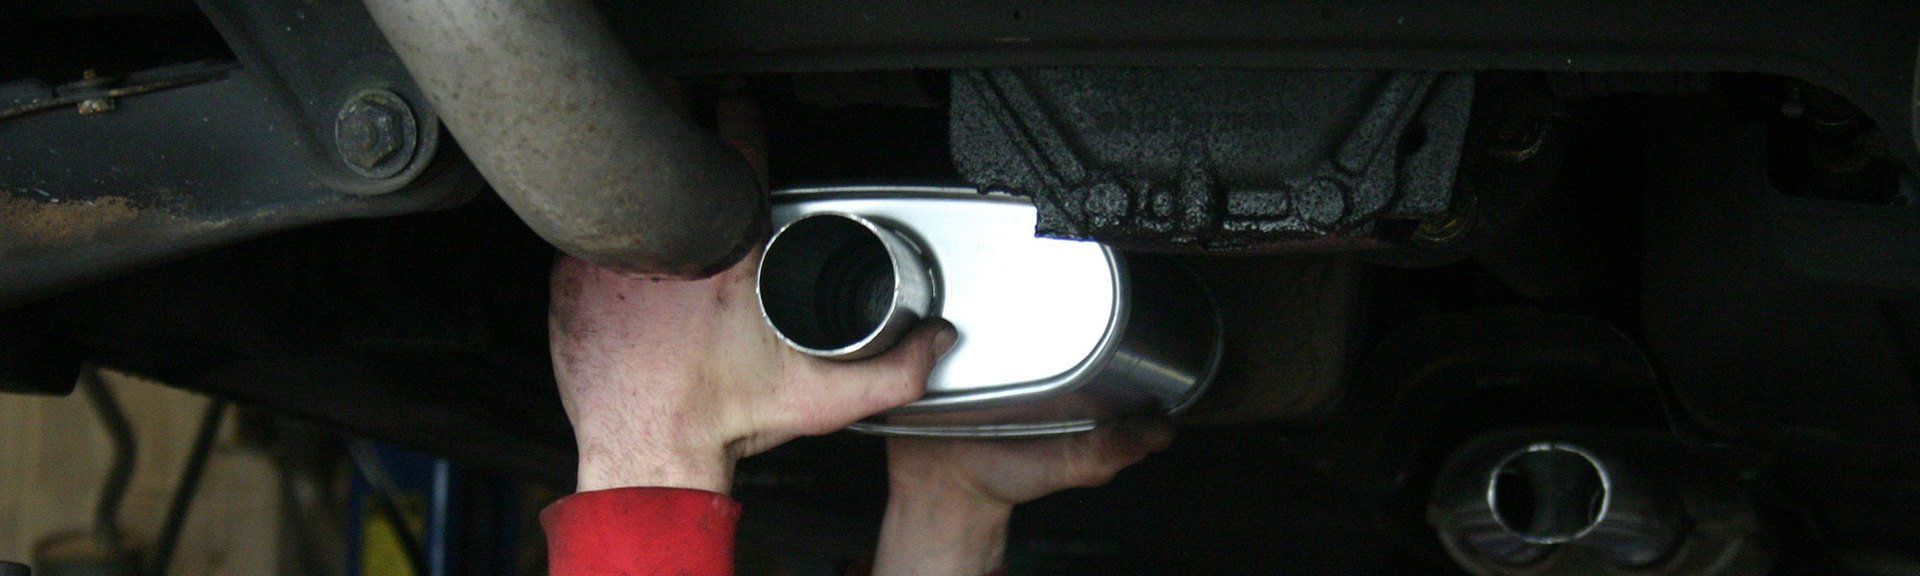 Speedy 1 Mufflers & Brakes | Auto Repair | Decatur, IL